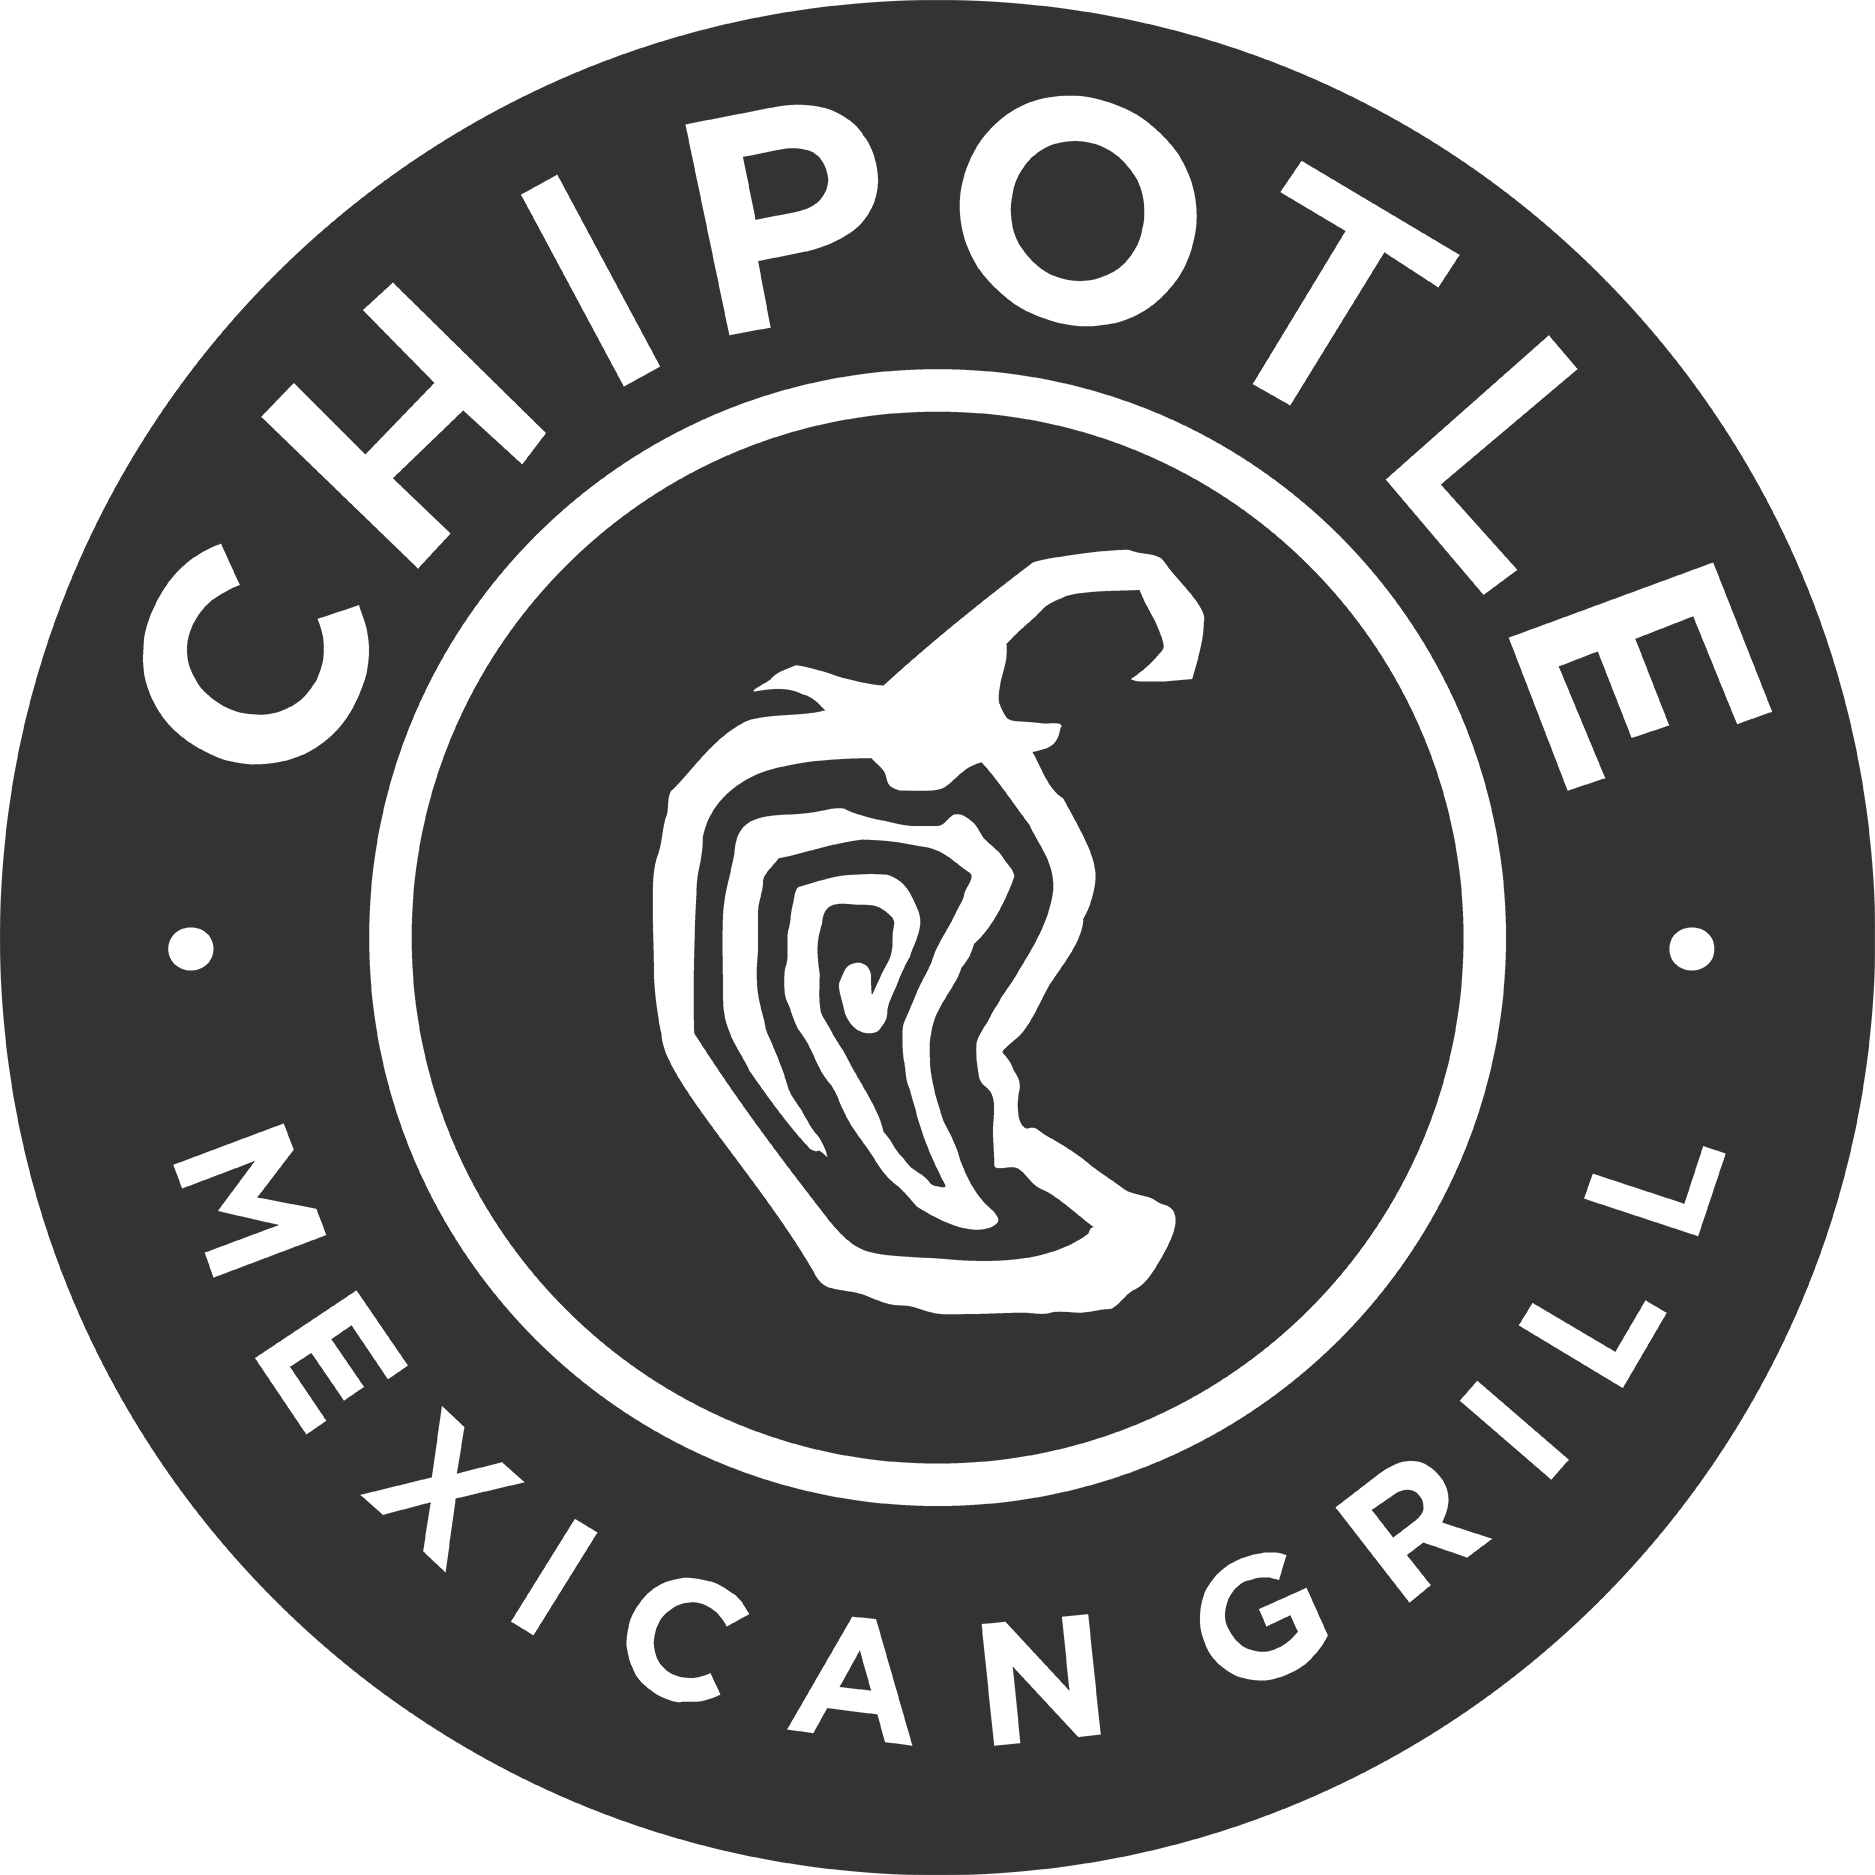 chipotle-mexican-grill-logo-black